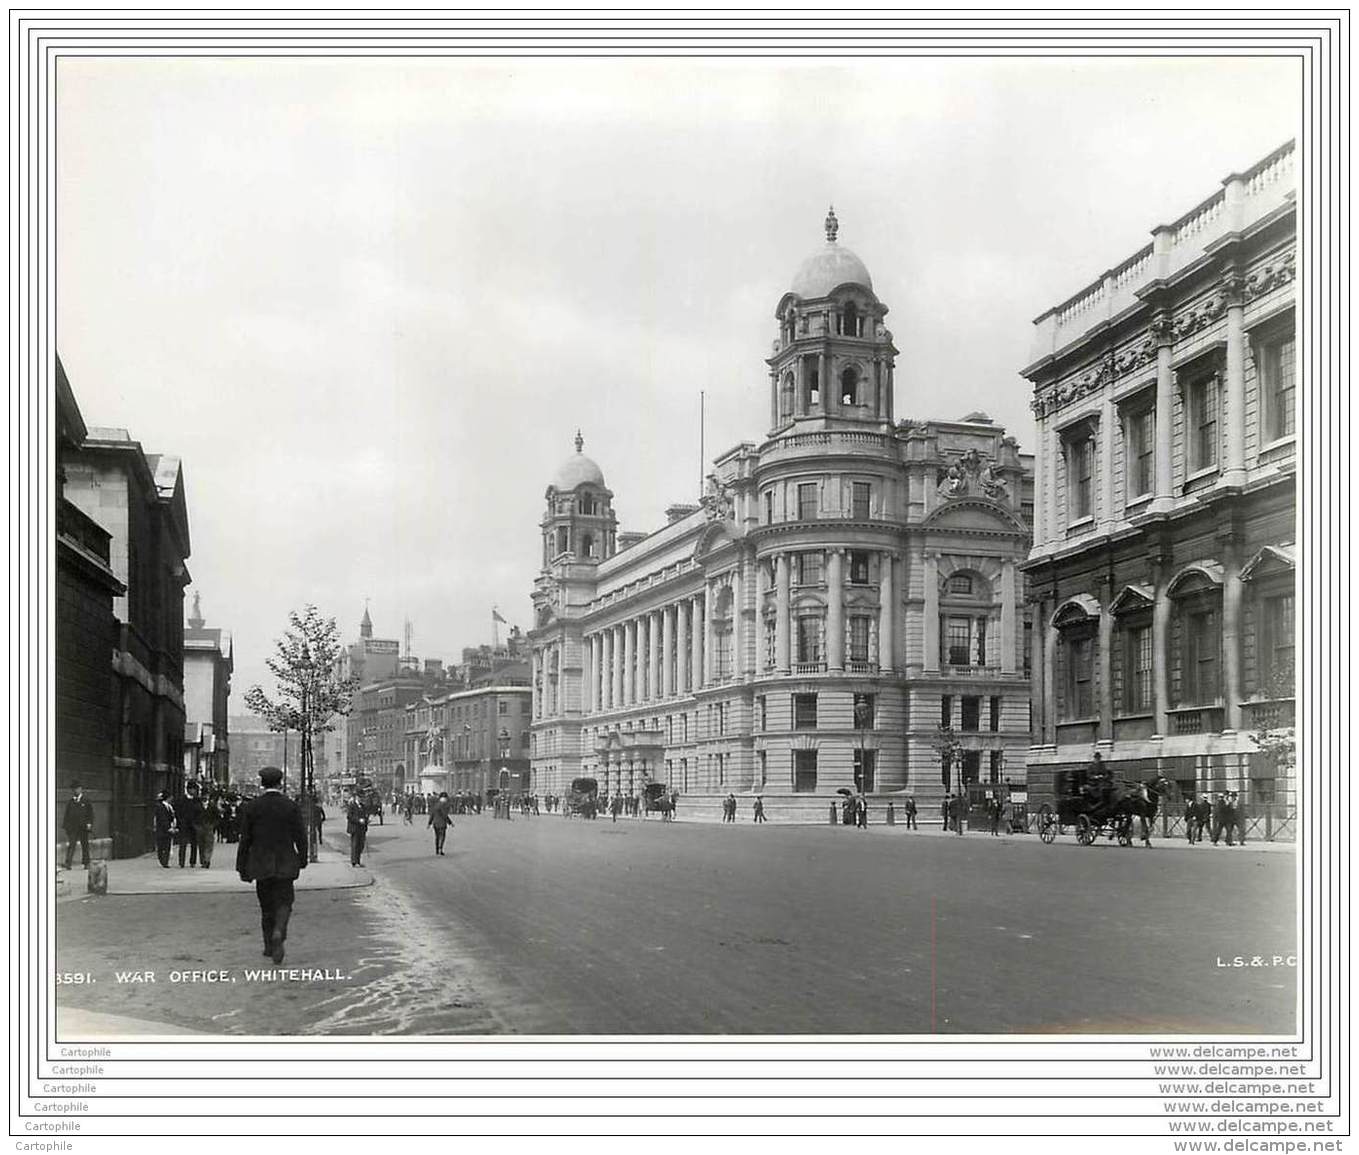 Press Photo - UK - London - The War Office, Whitehall 1907 - Lieux